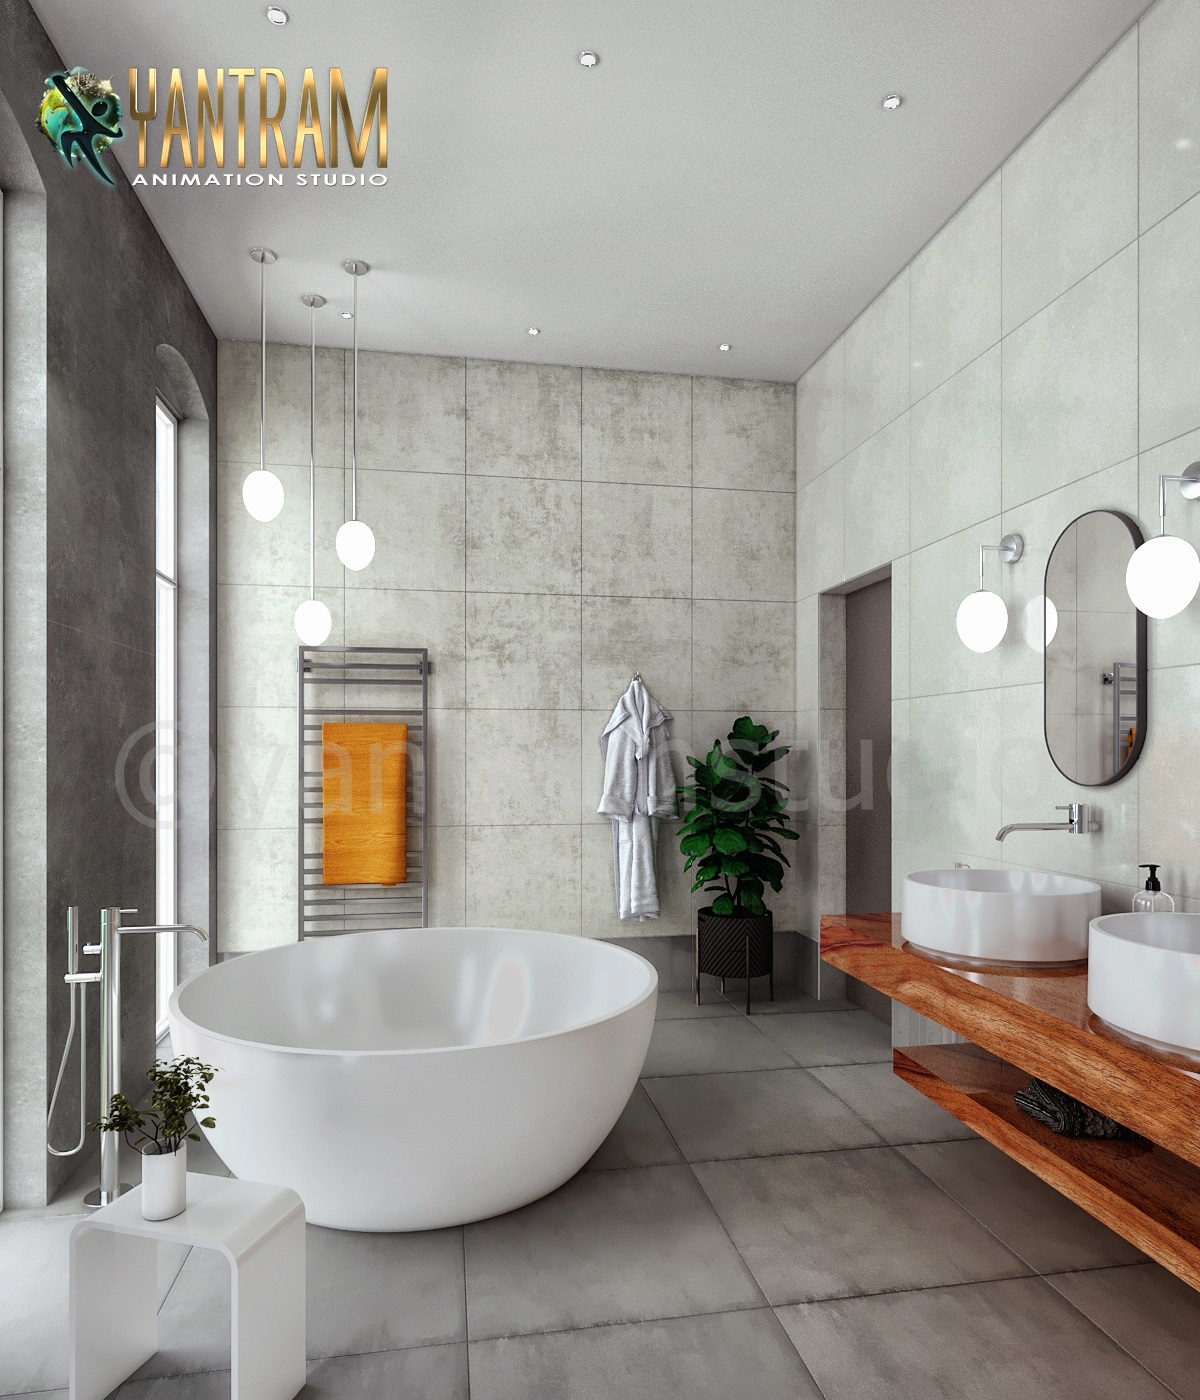 3d interior design of Classic Bathroom Concept by Yantram 3d interior design company, New Jersey -USA